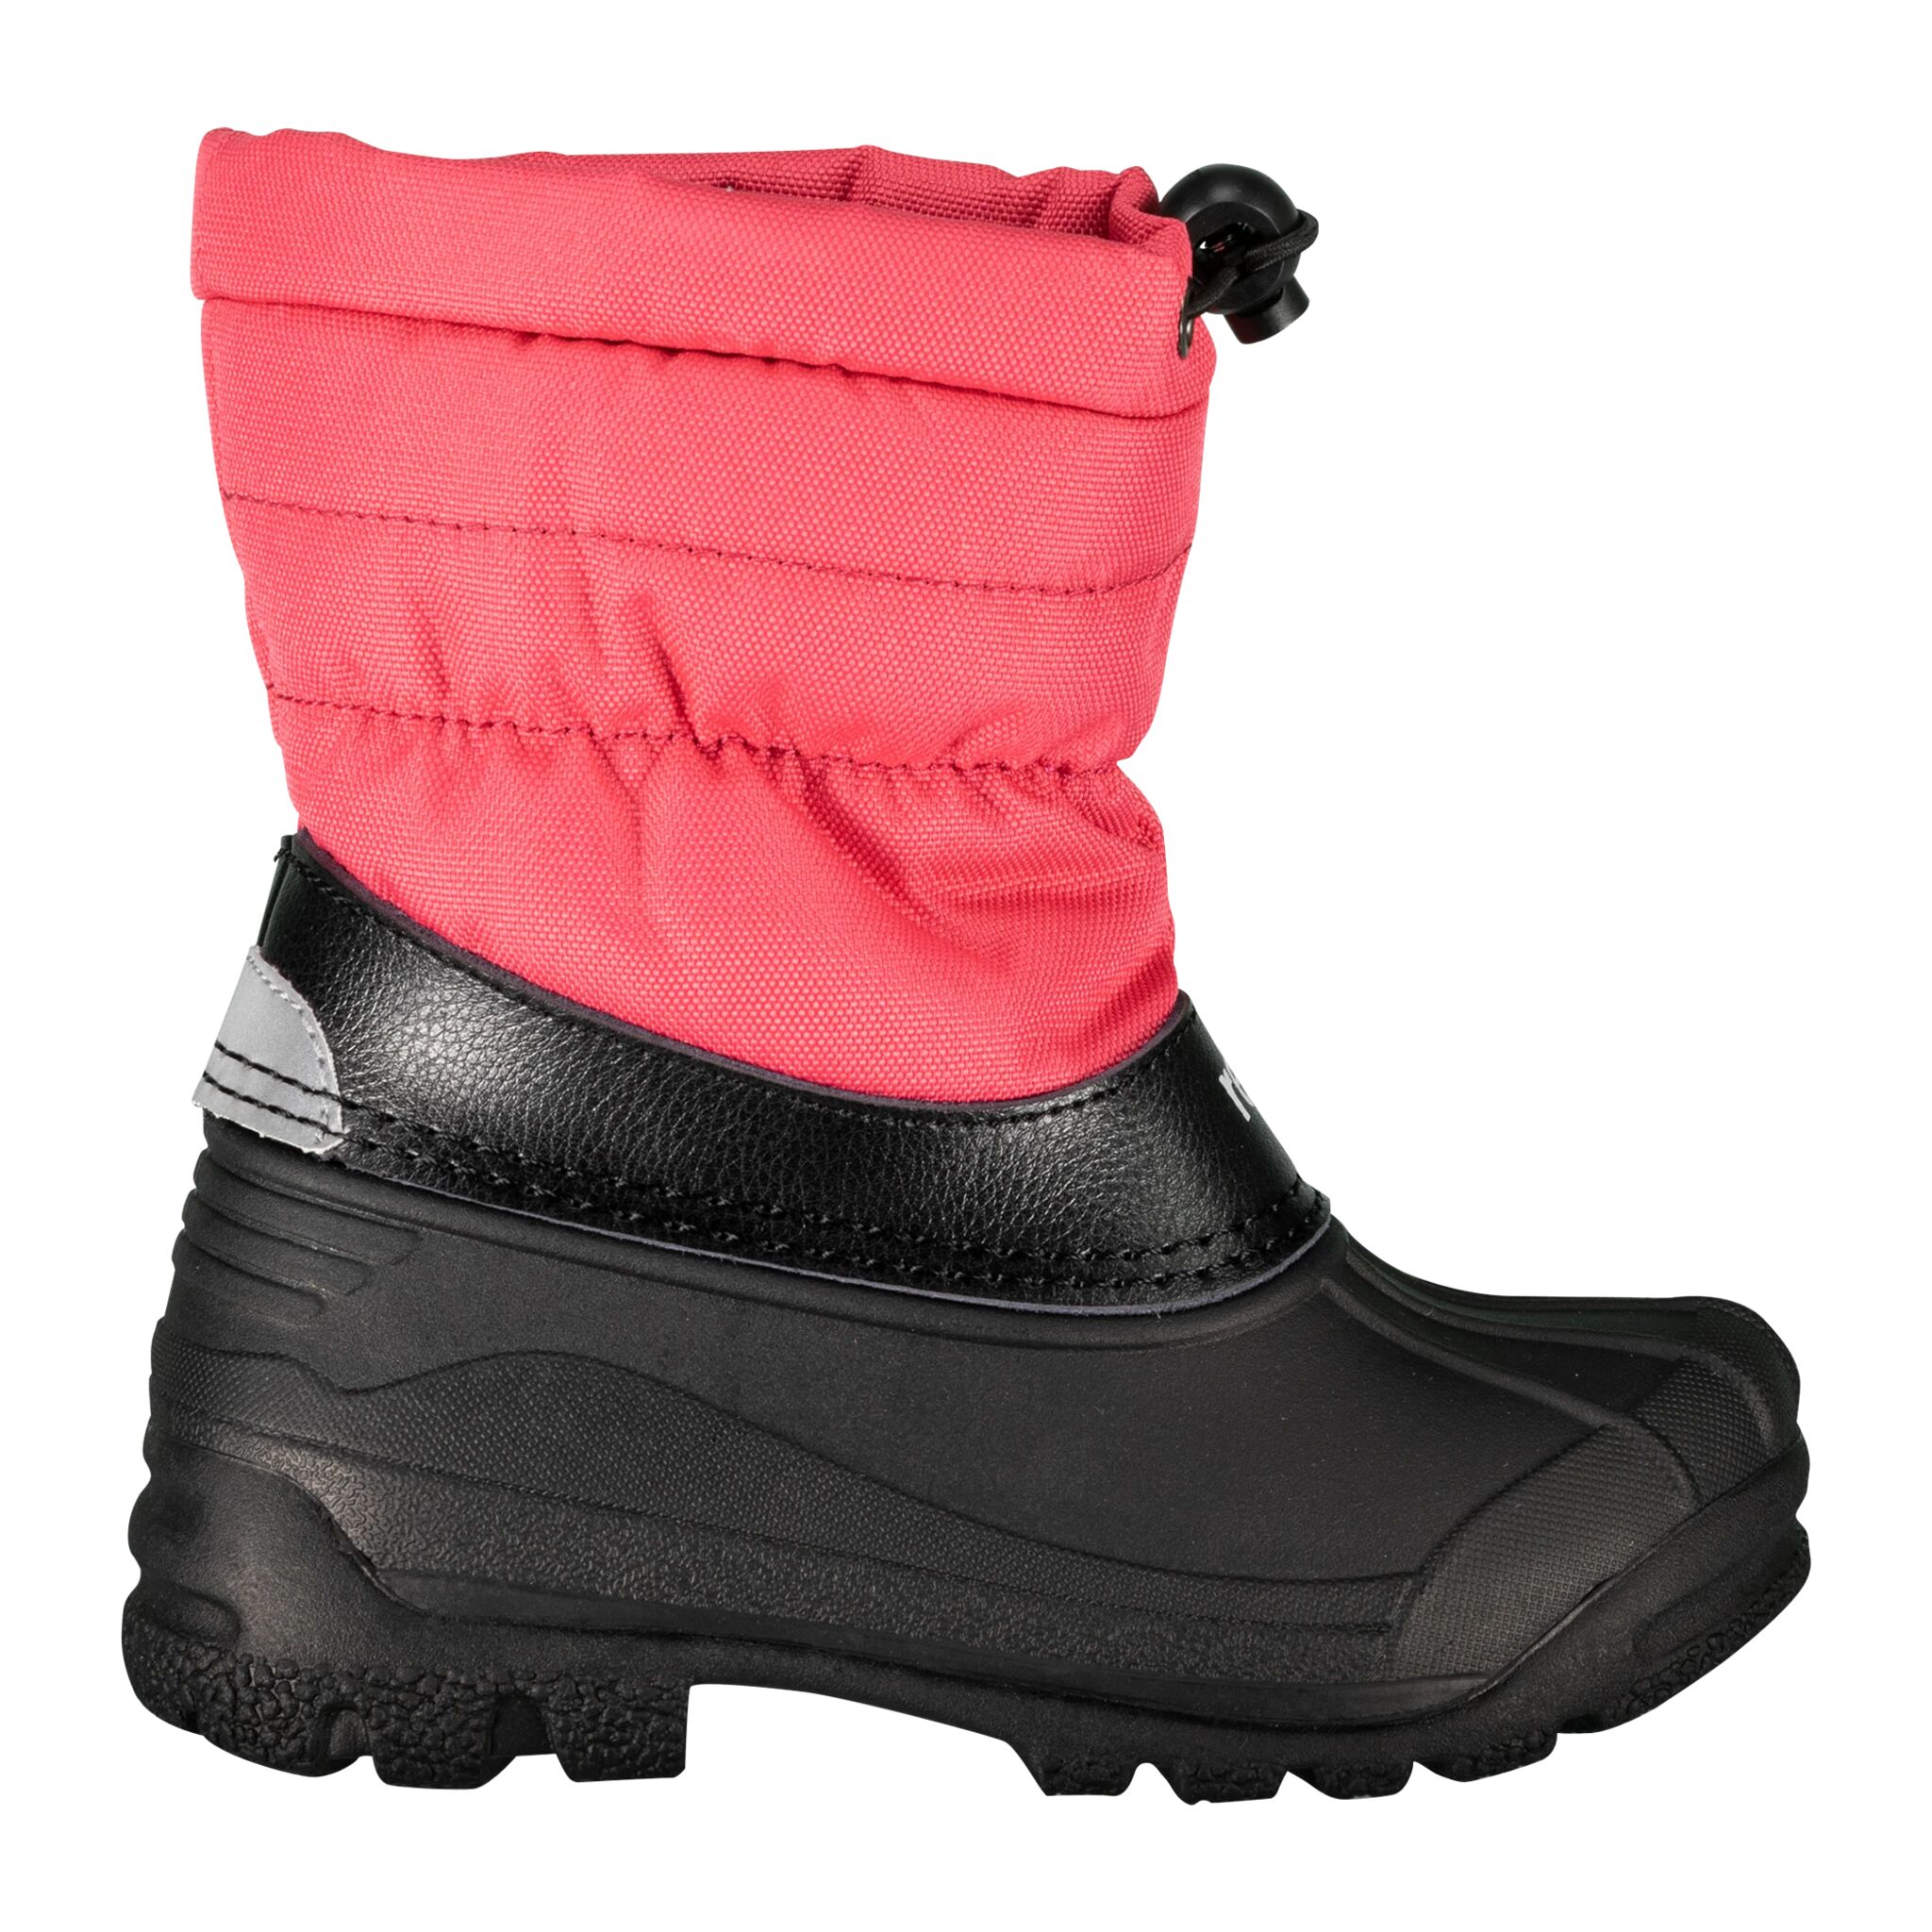 Reima Winter boots Nefar, vintersko barn 26 Azalea Pink